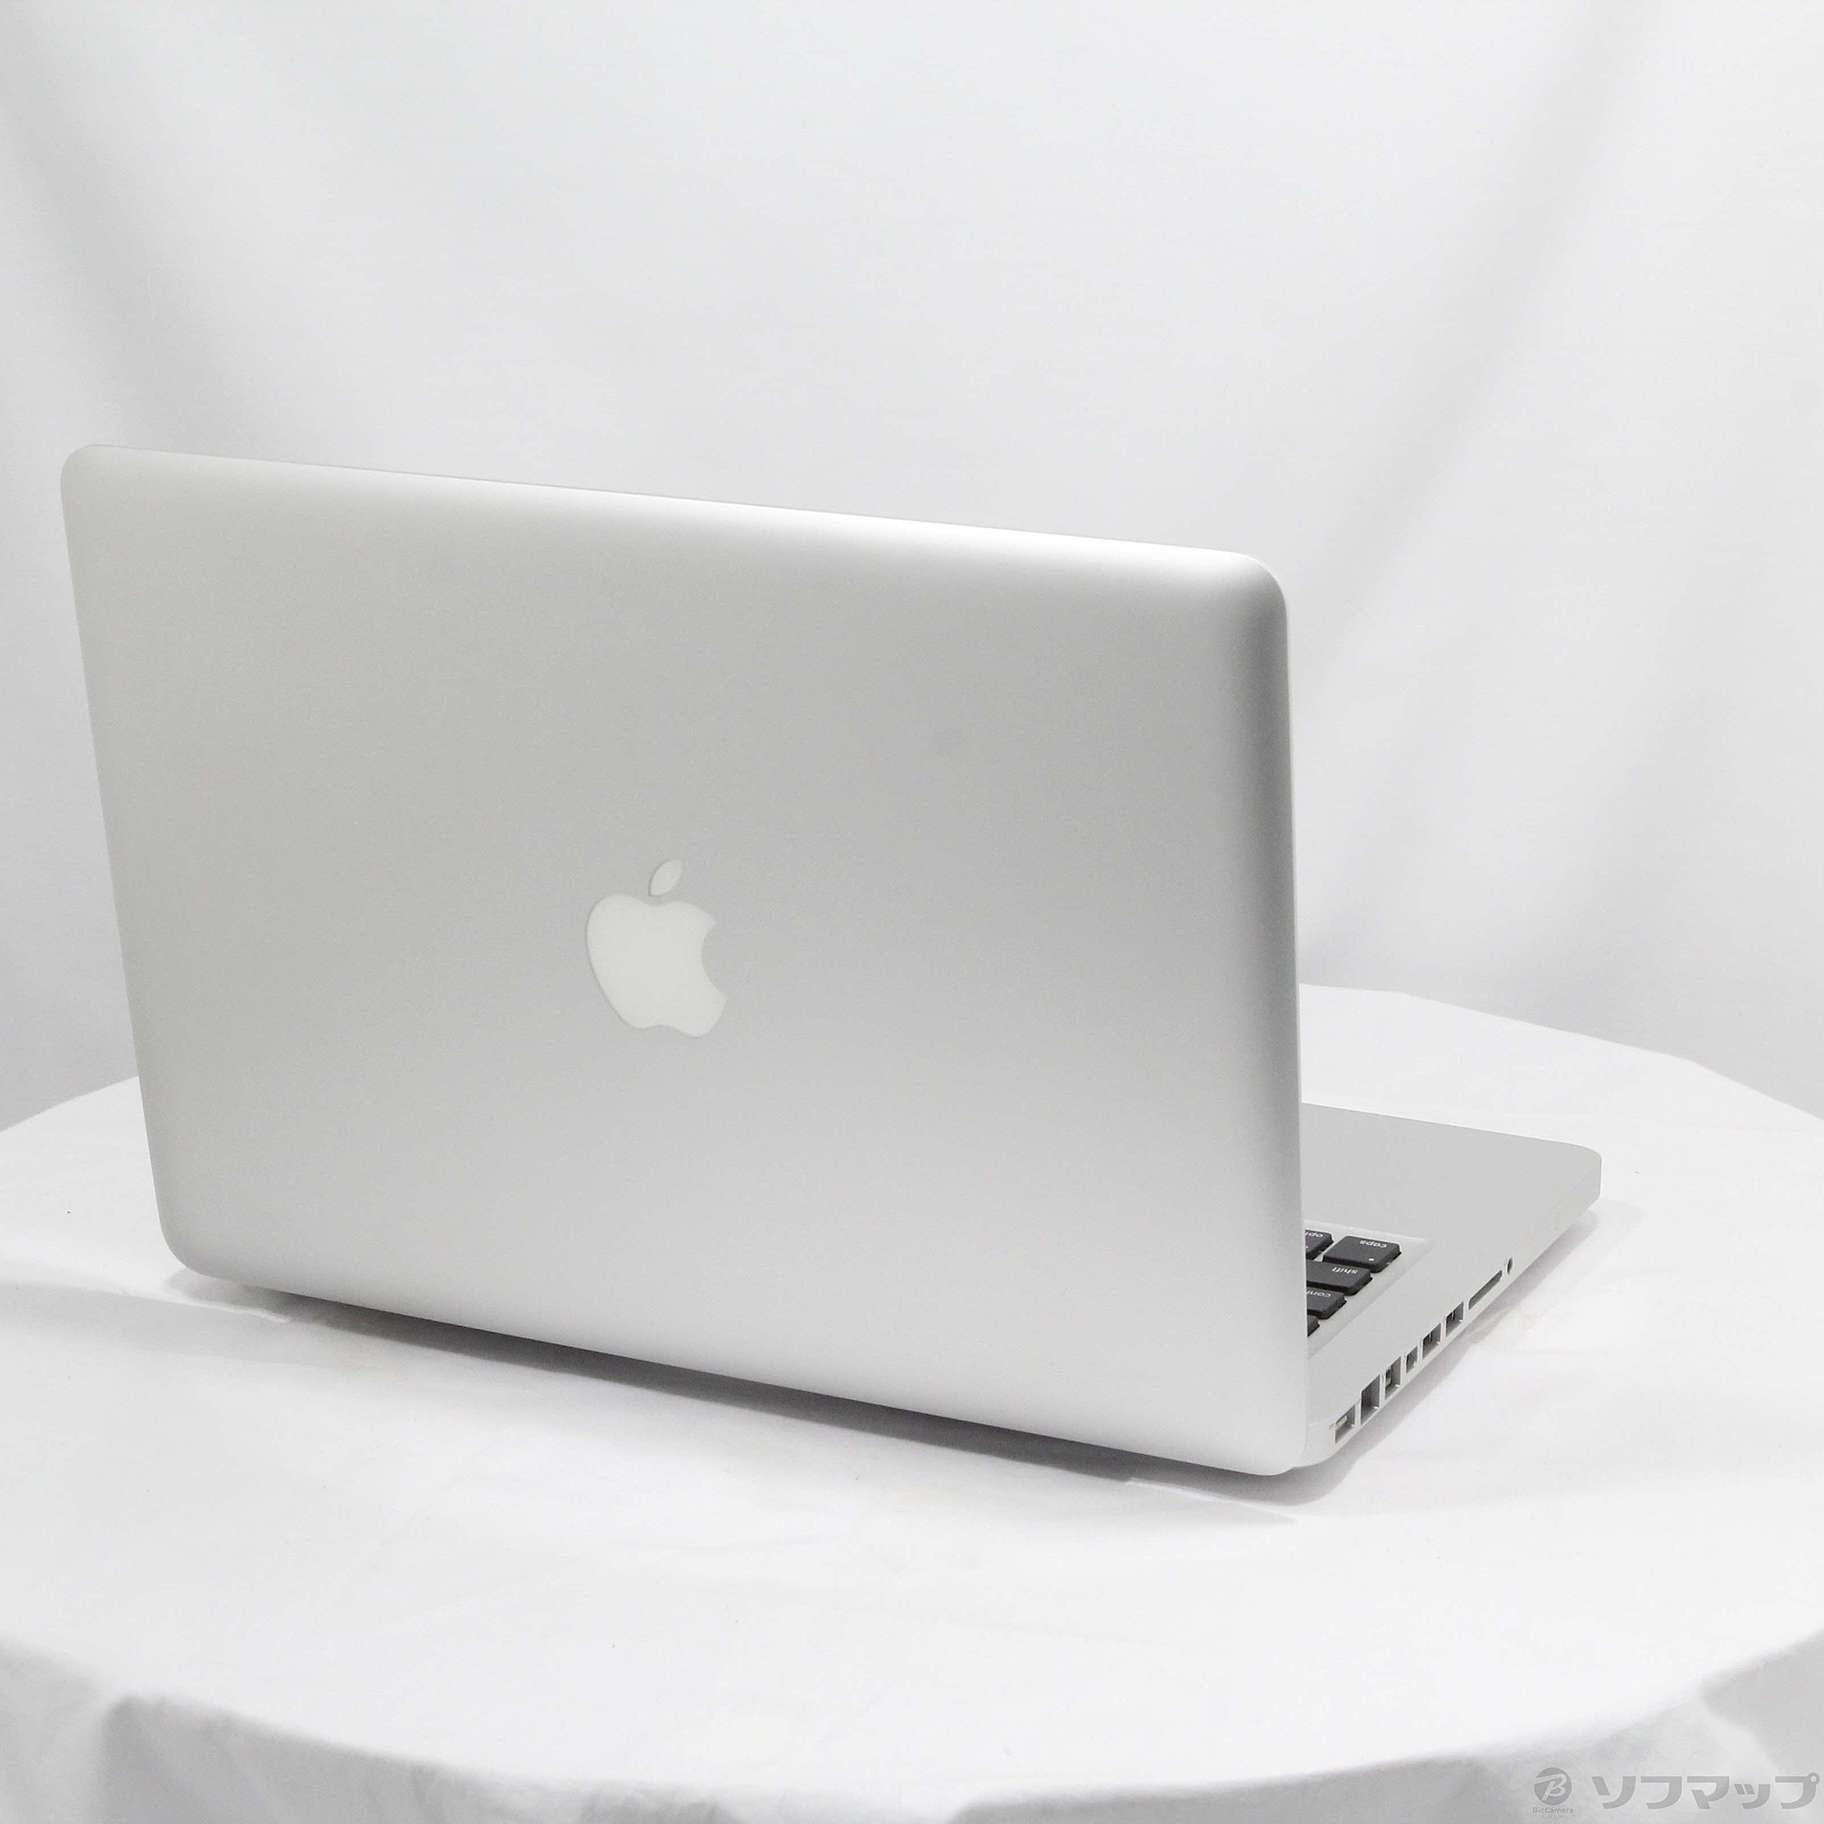 中古】MacBook Pro 13.3-inch Mid 2012 MD101J／A Core_i5 2.5GHz 8GB